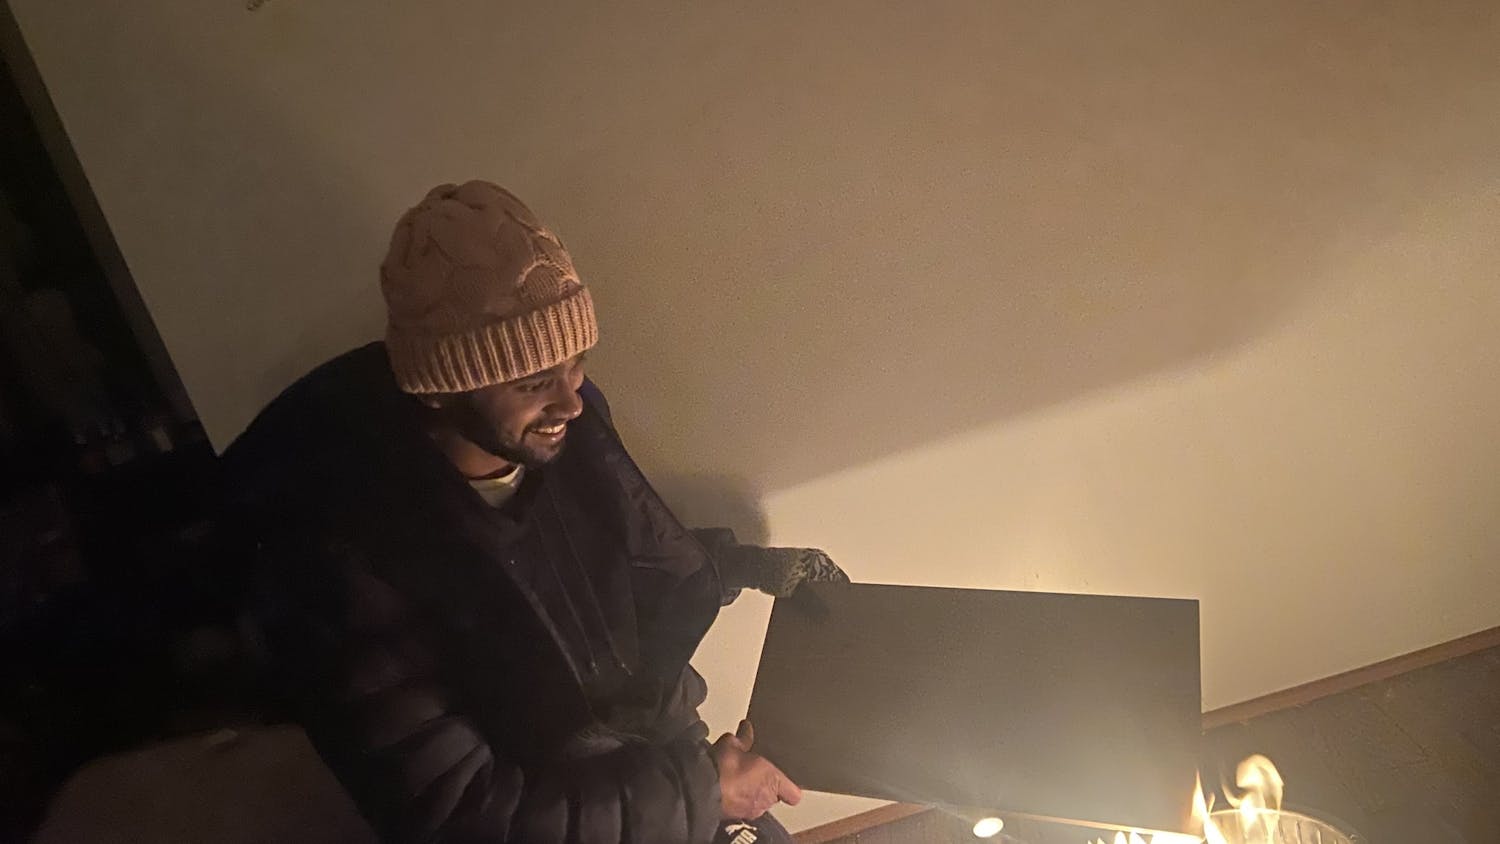 Karthik Ramkumar had to resort to burning a book to stay warm during Winter Storm Elliot.